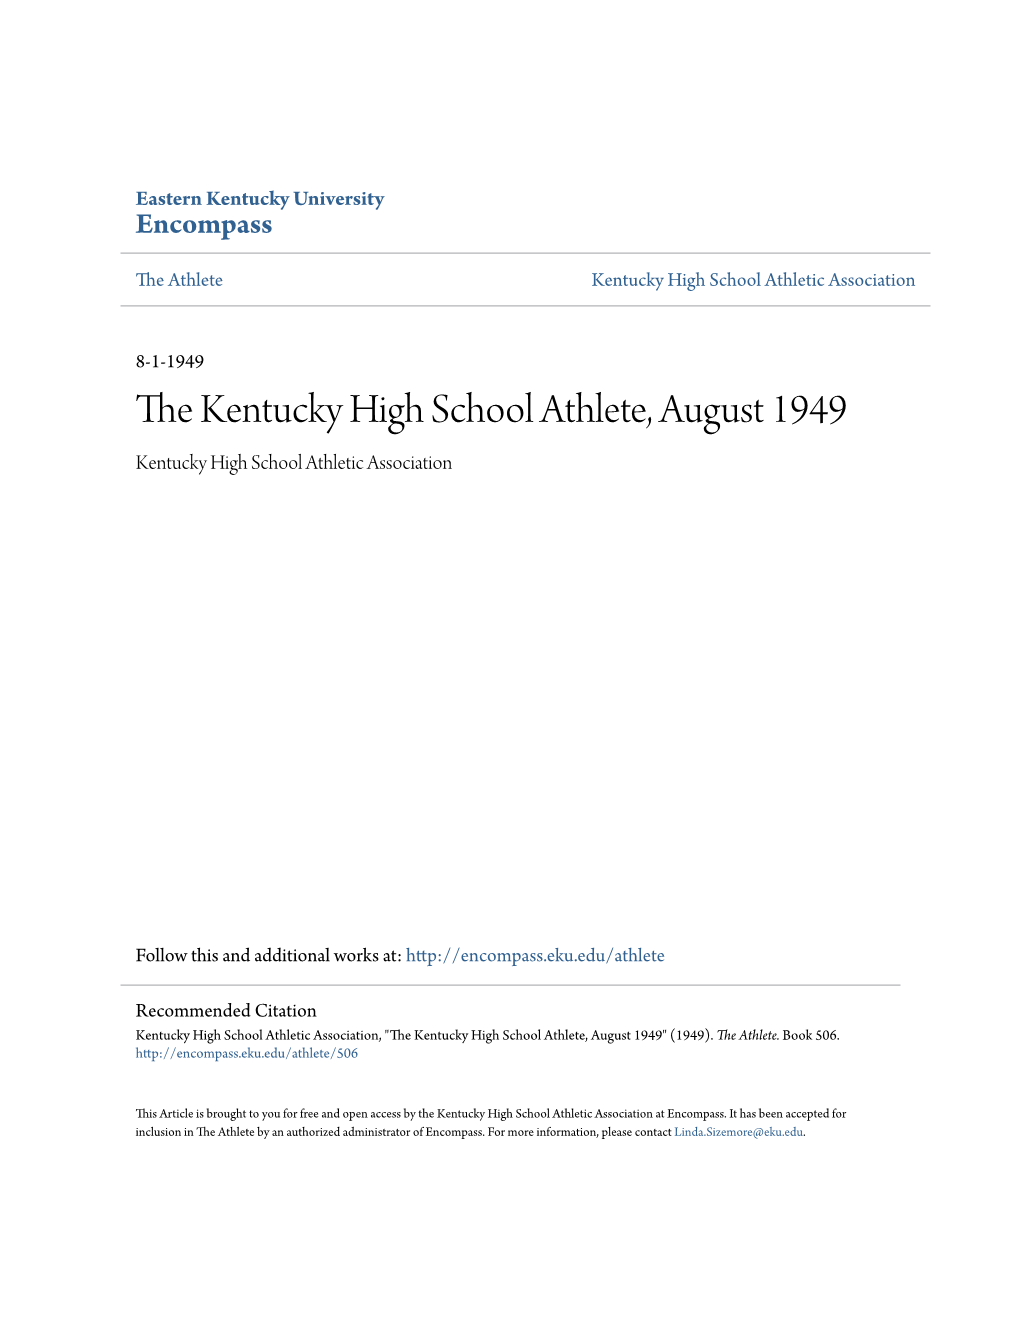 The Kentucky High School Athlete, August 1949 Kentucky High School Athletic Association